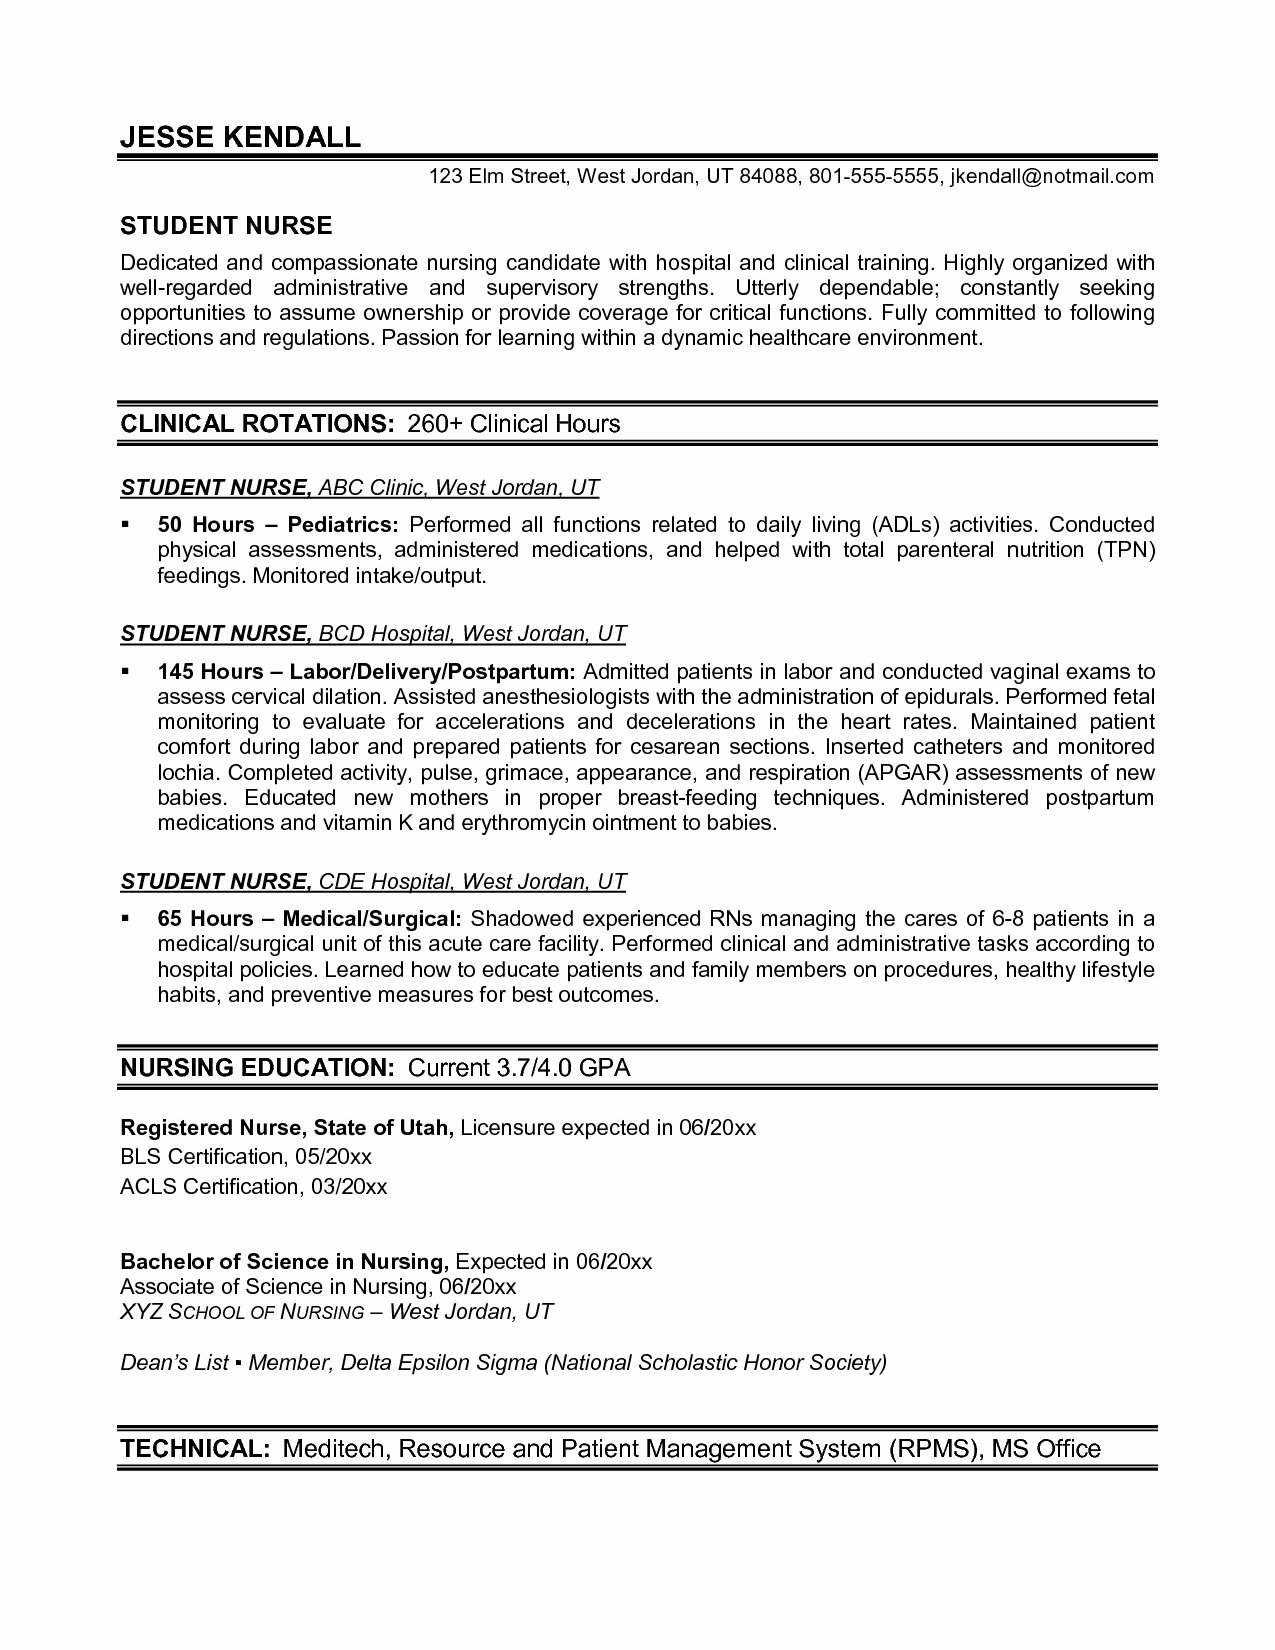 Resume Sample for Nurses Fresh Graduate Sample Resume for Graduate Nursing Schol